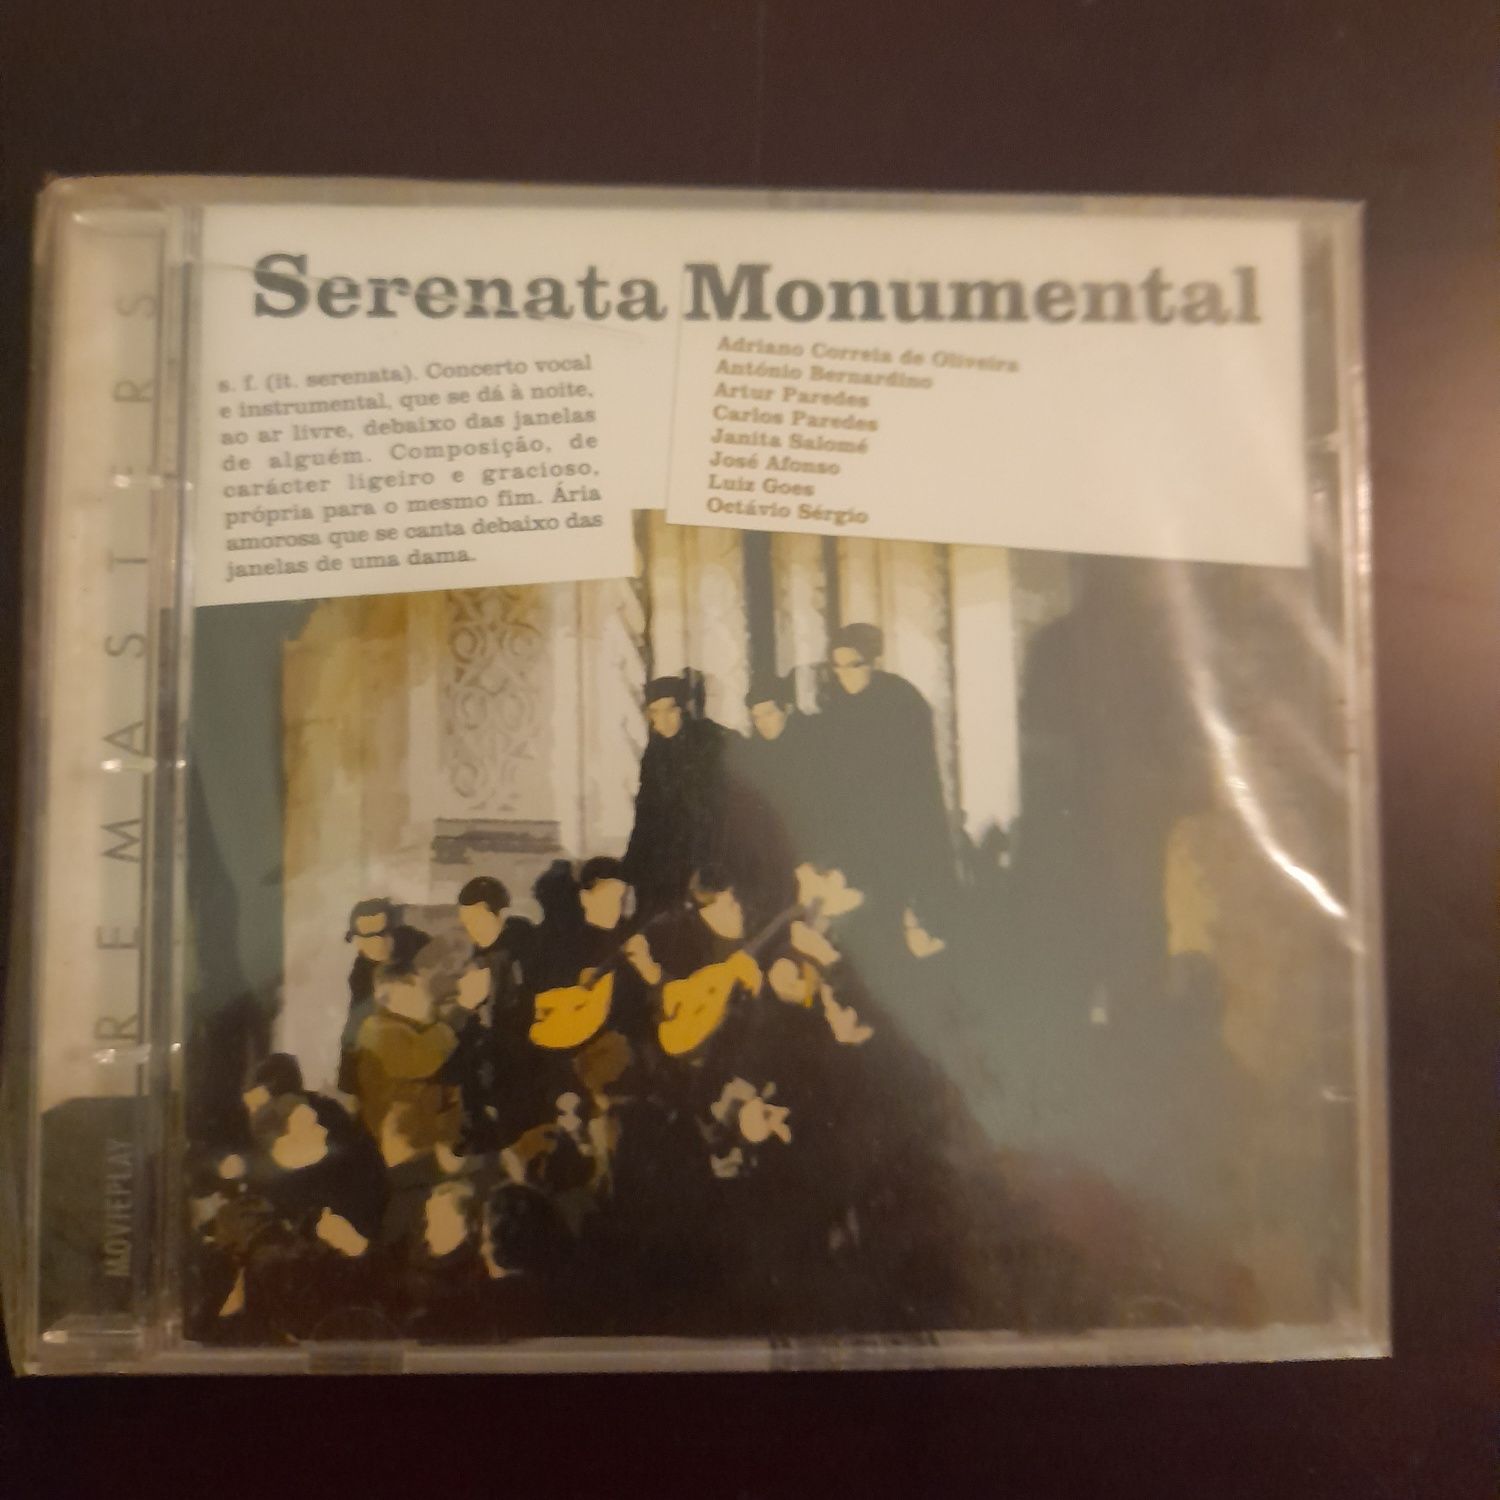 Cds musica - Serenata Monumental